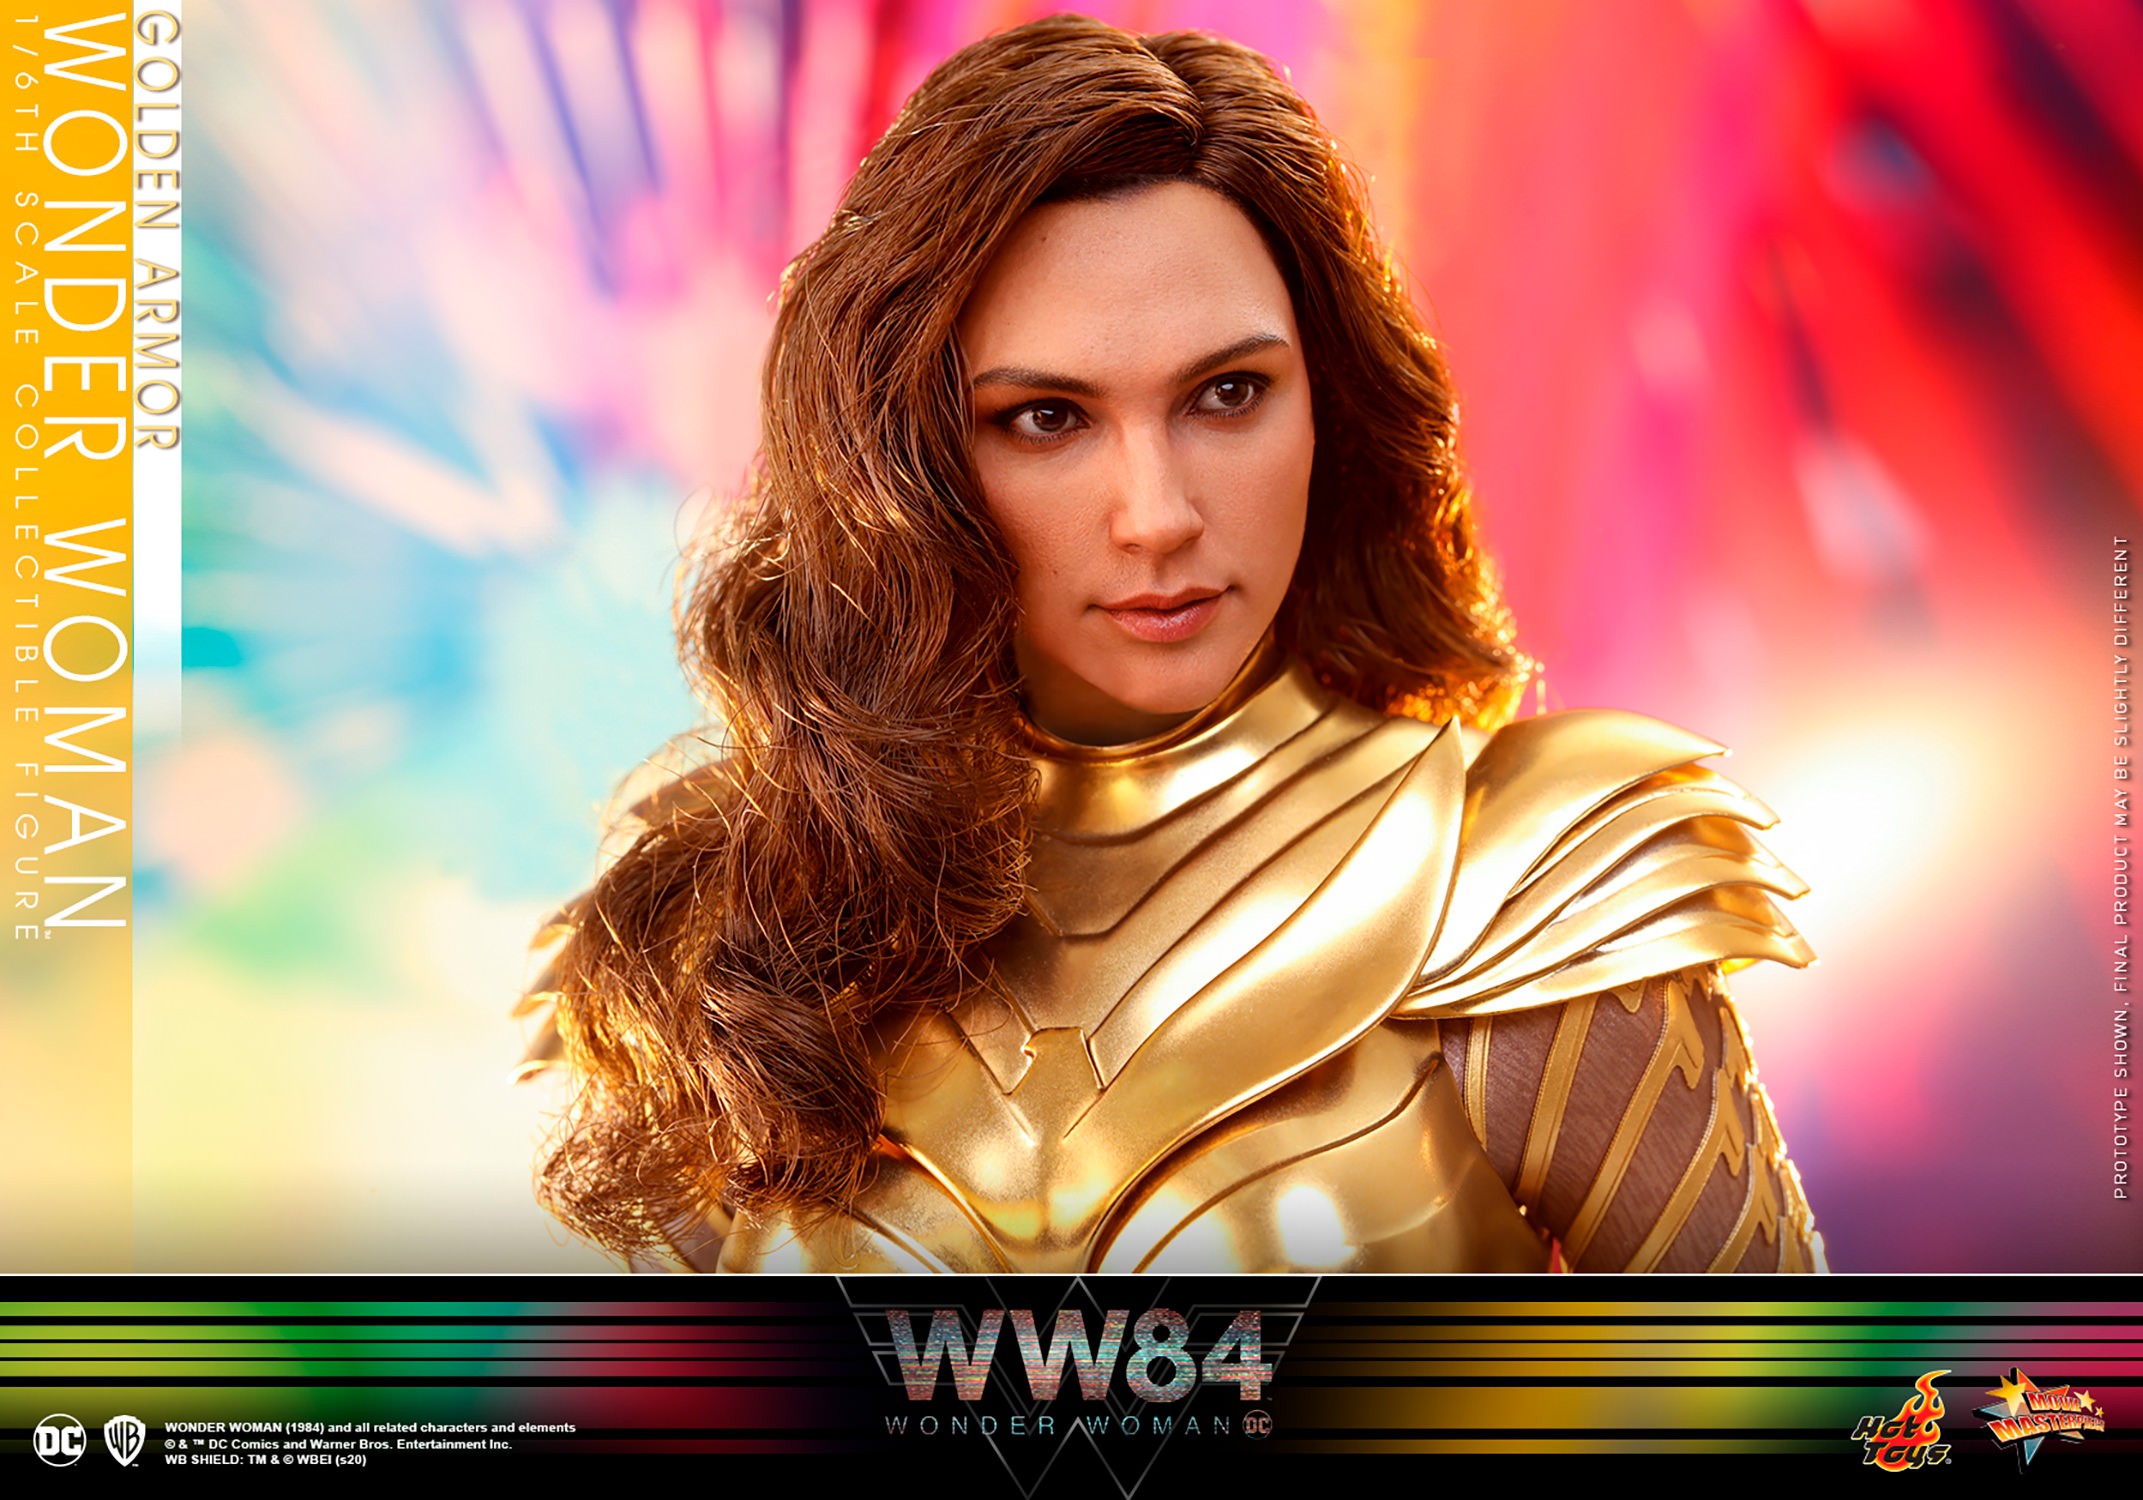 Golden Armor Wonder Woman